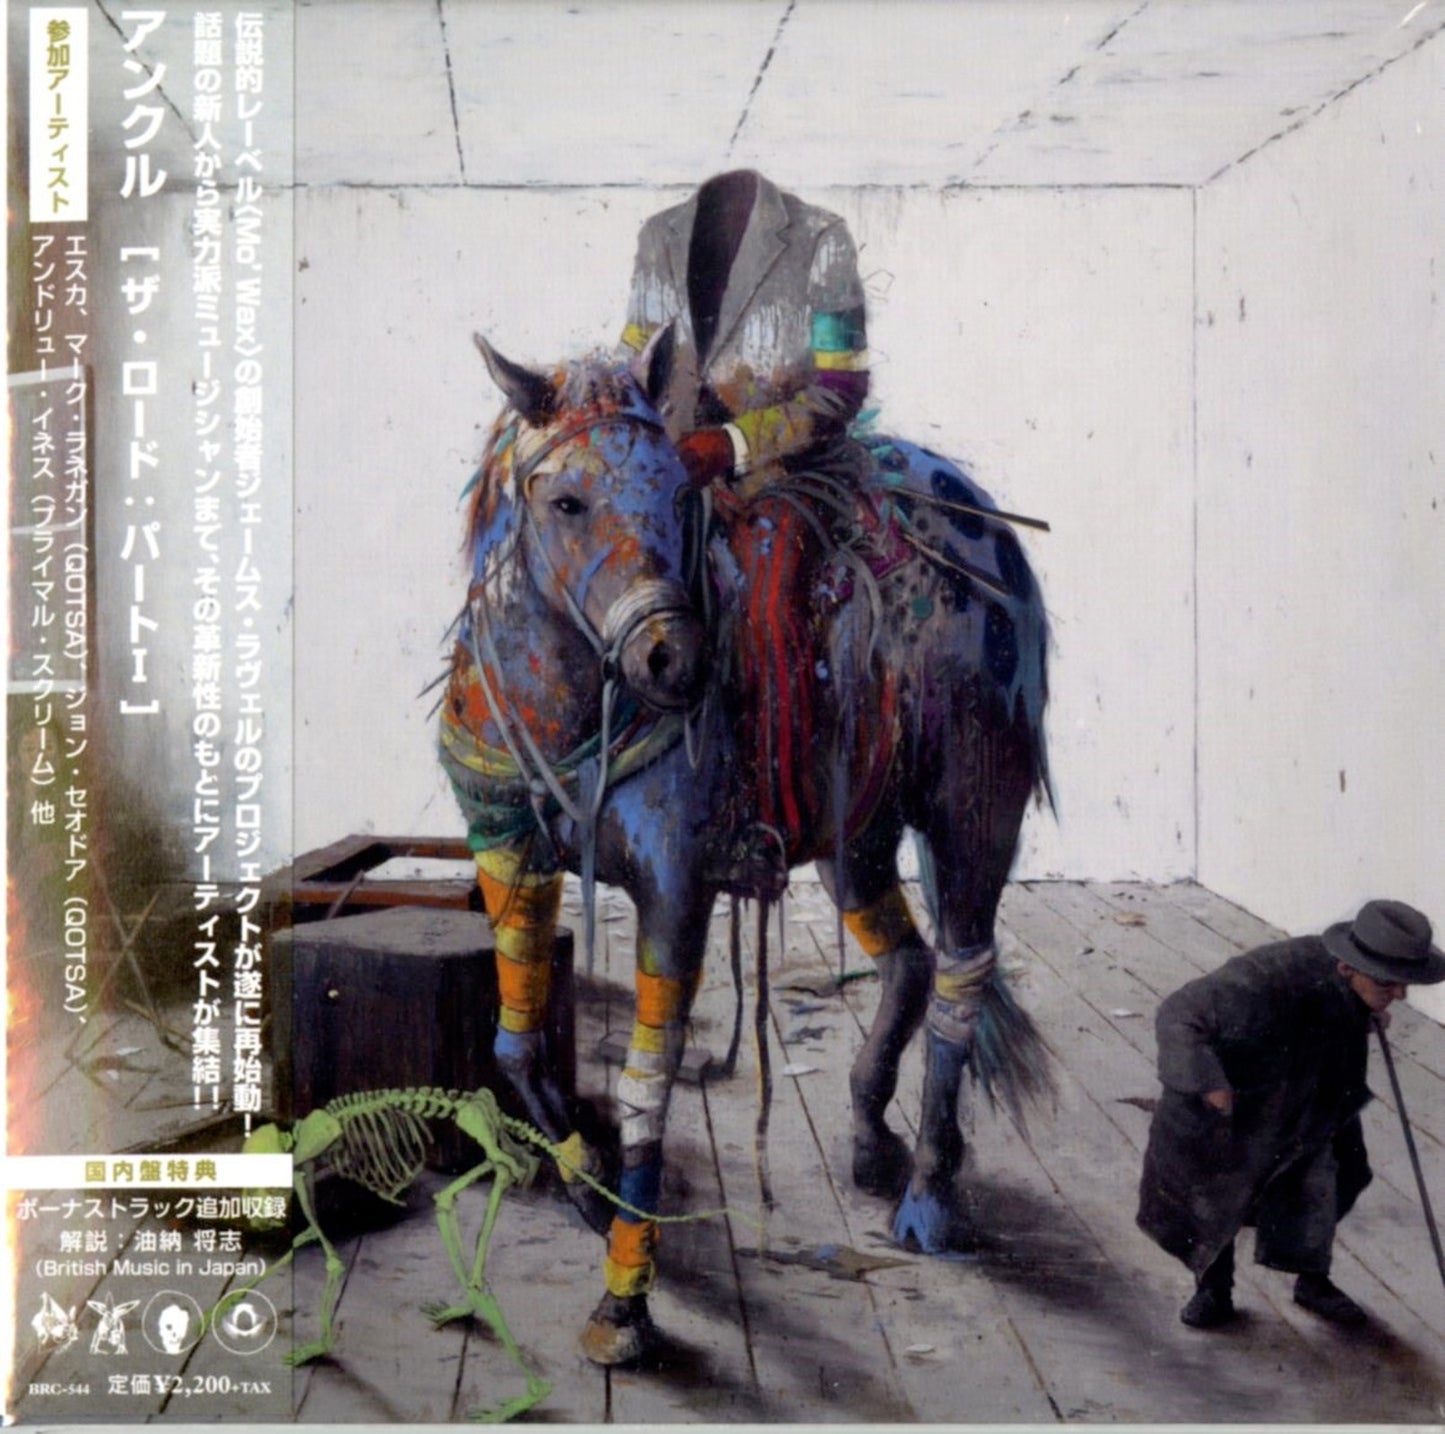 Unkle - The Road: Part 1 - Japan  Mini LP CD Bonus Track